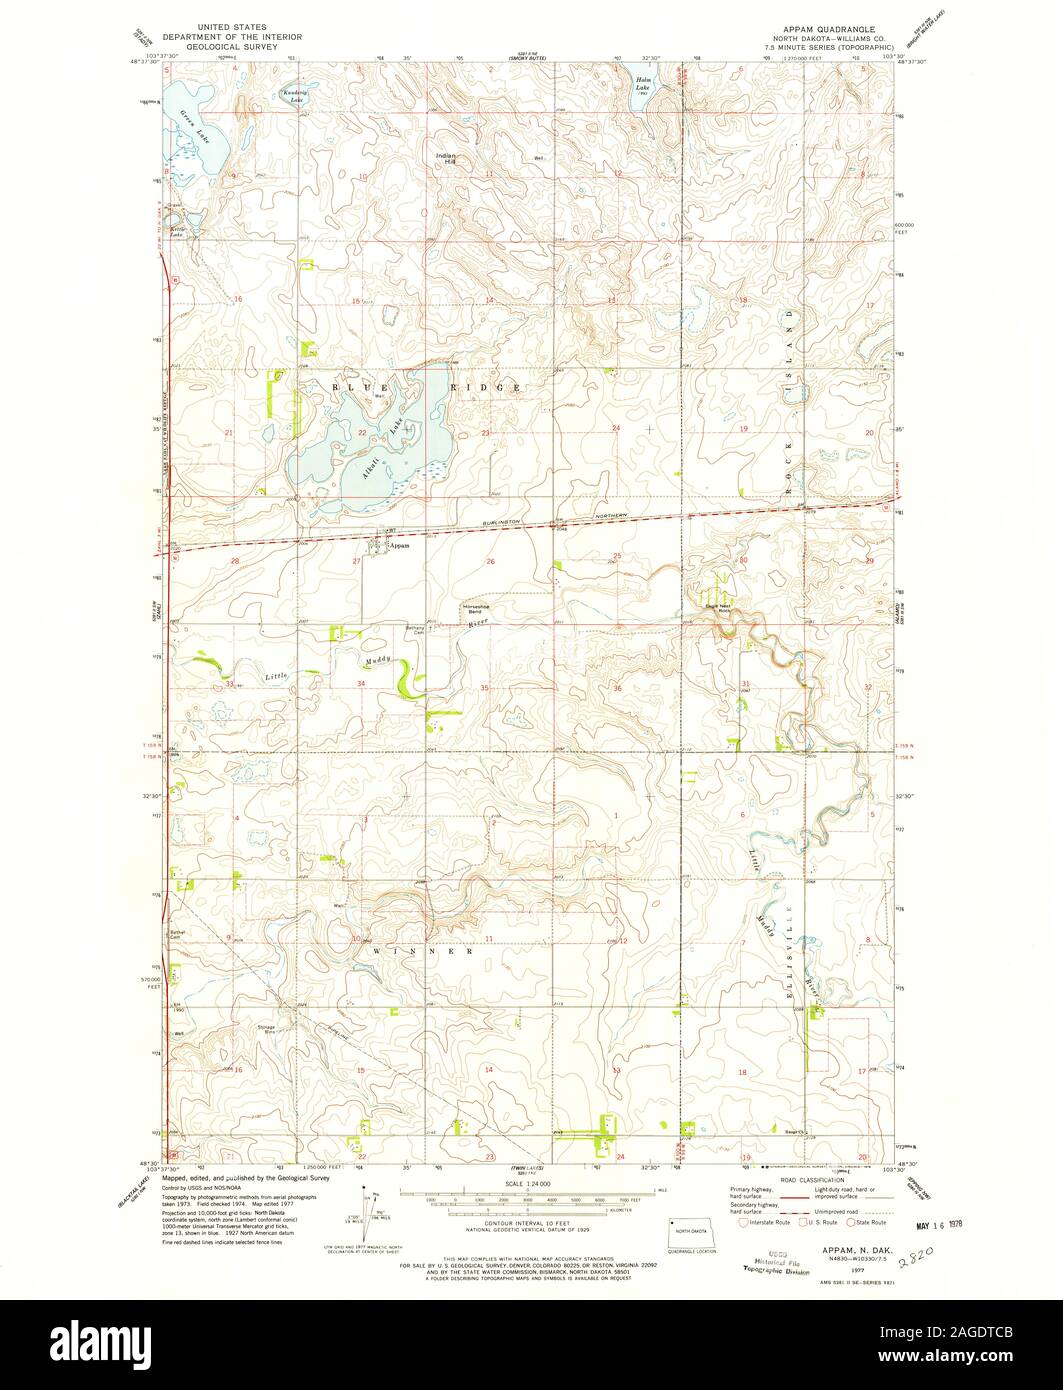 USGS TOPO Map North Dakota ND Appam 283400 1977 24000 Restoration Stock Photo